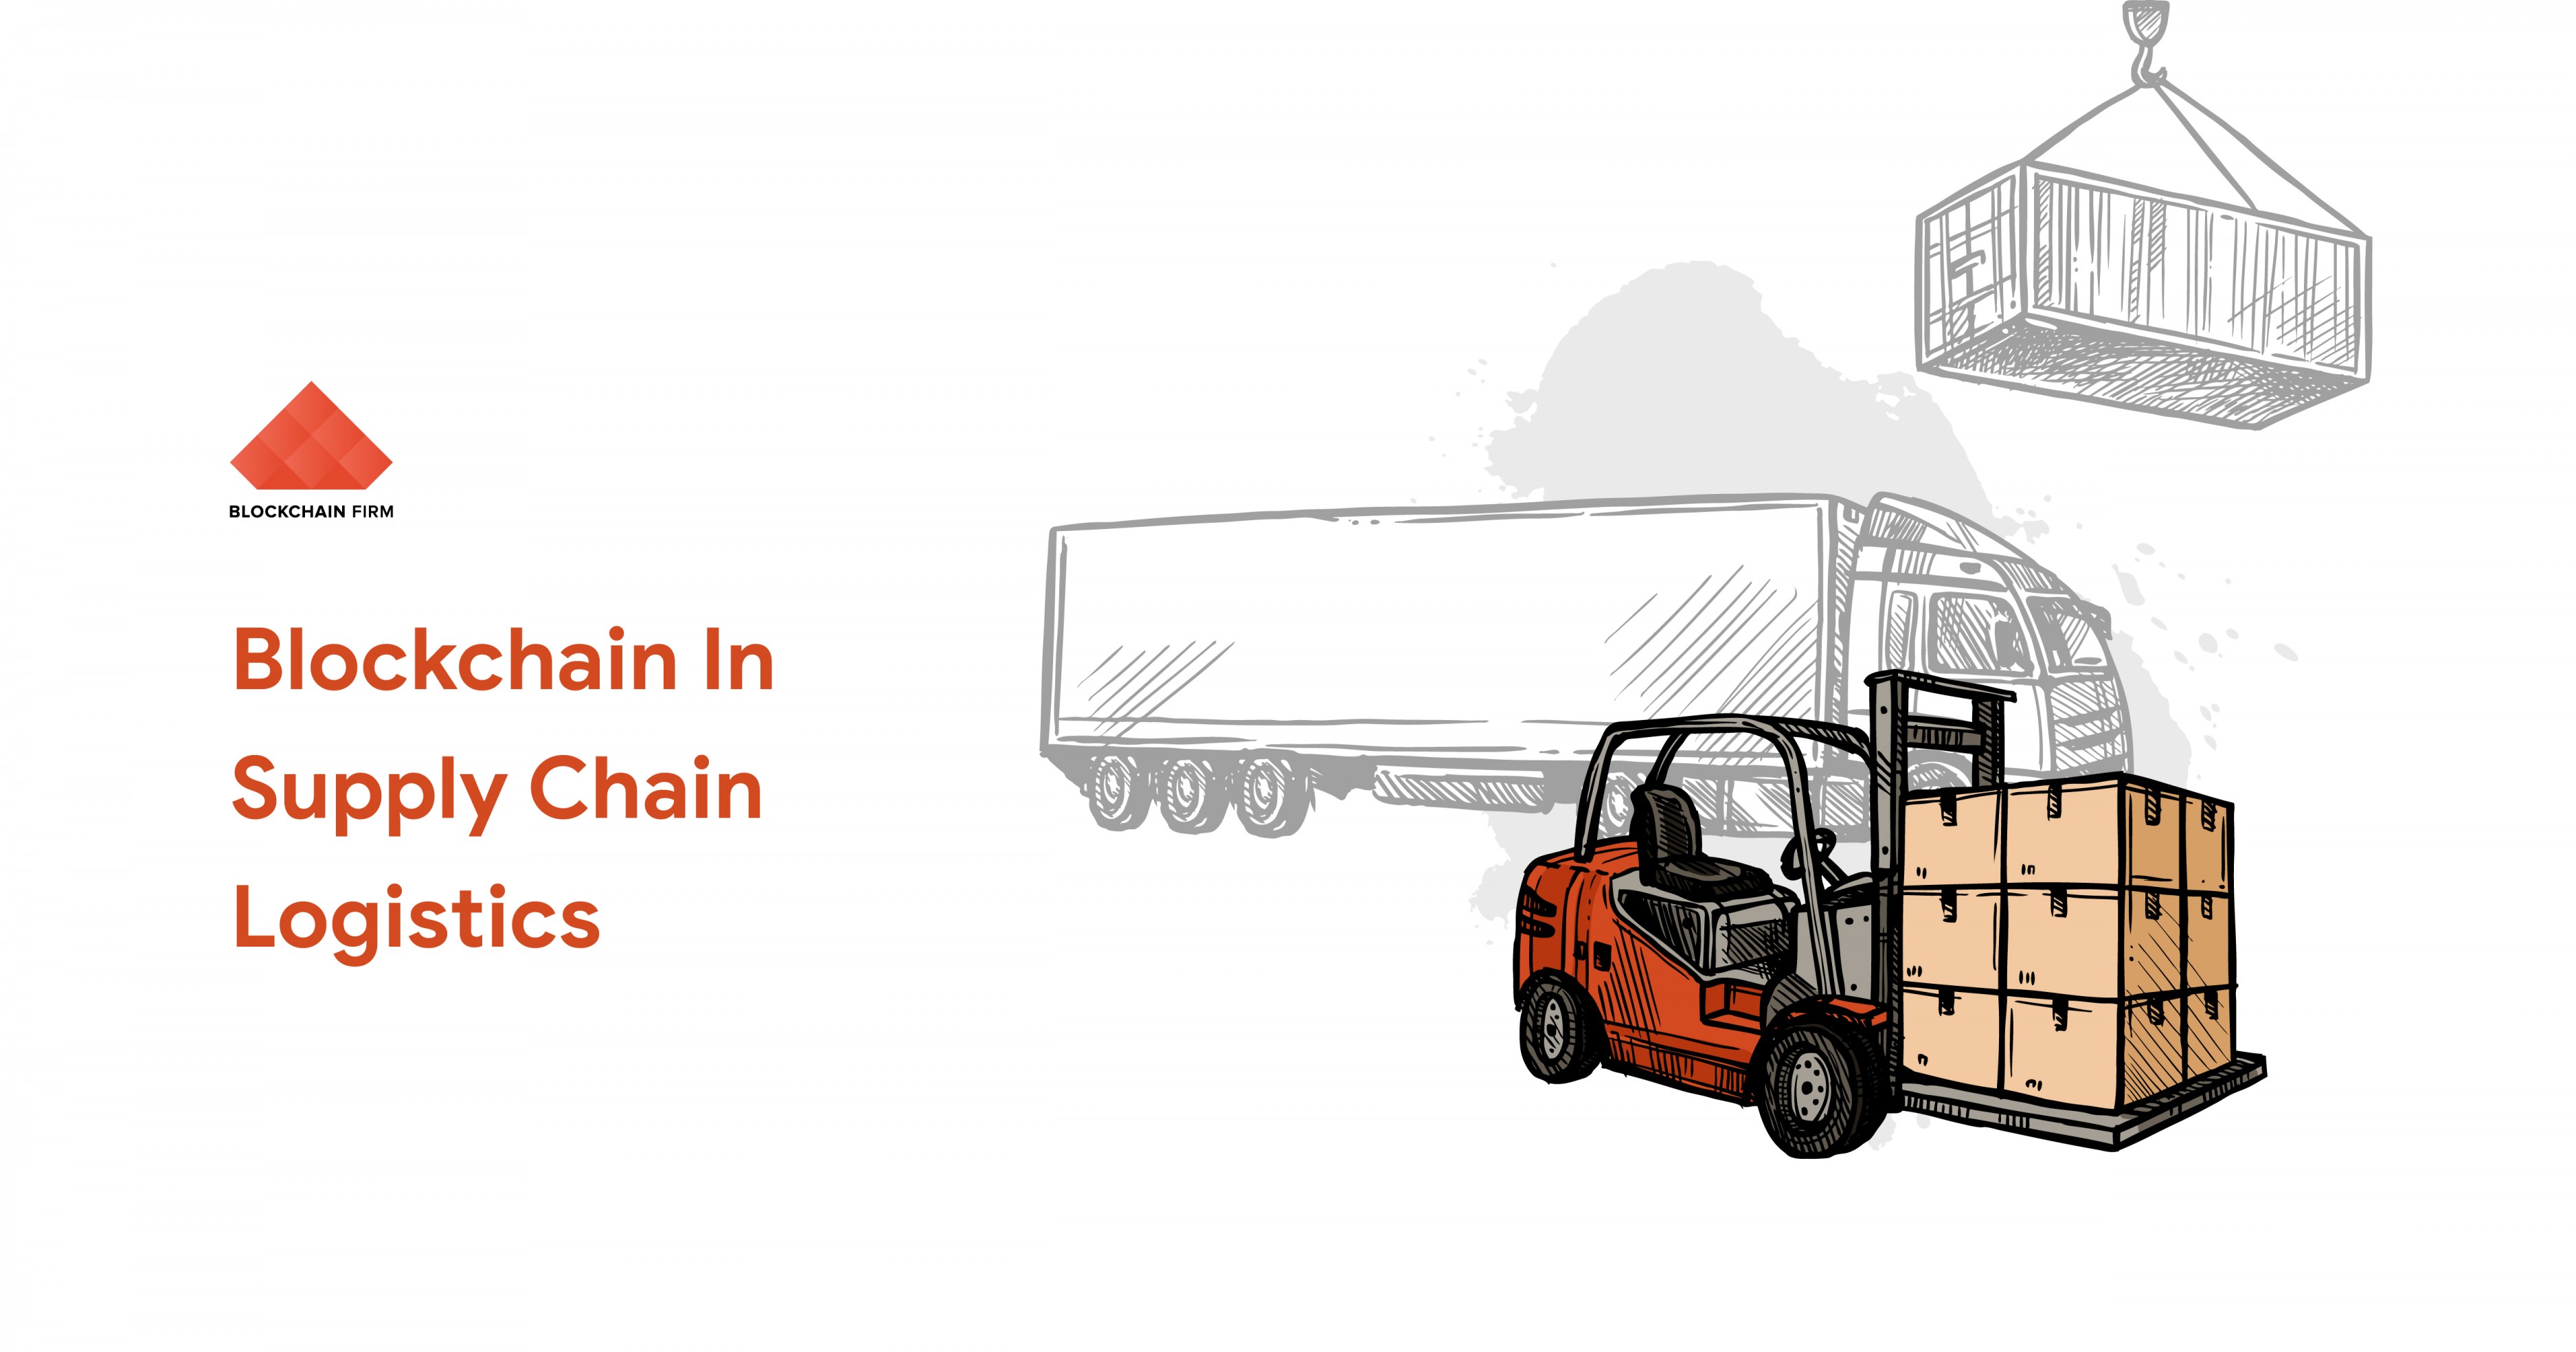 Blockchain in Supply Chain Logistics